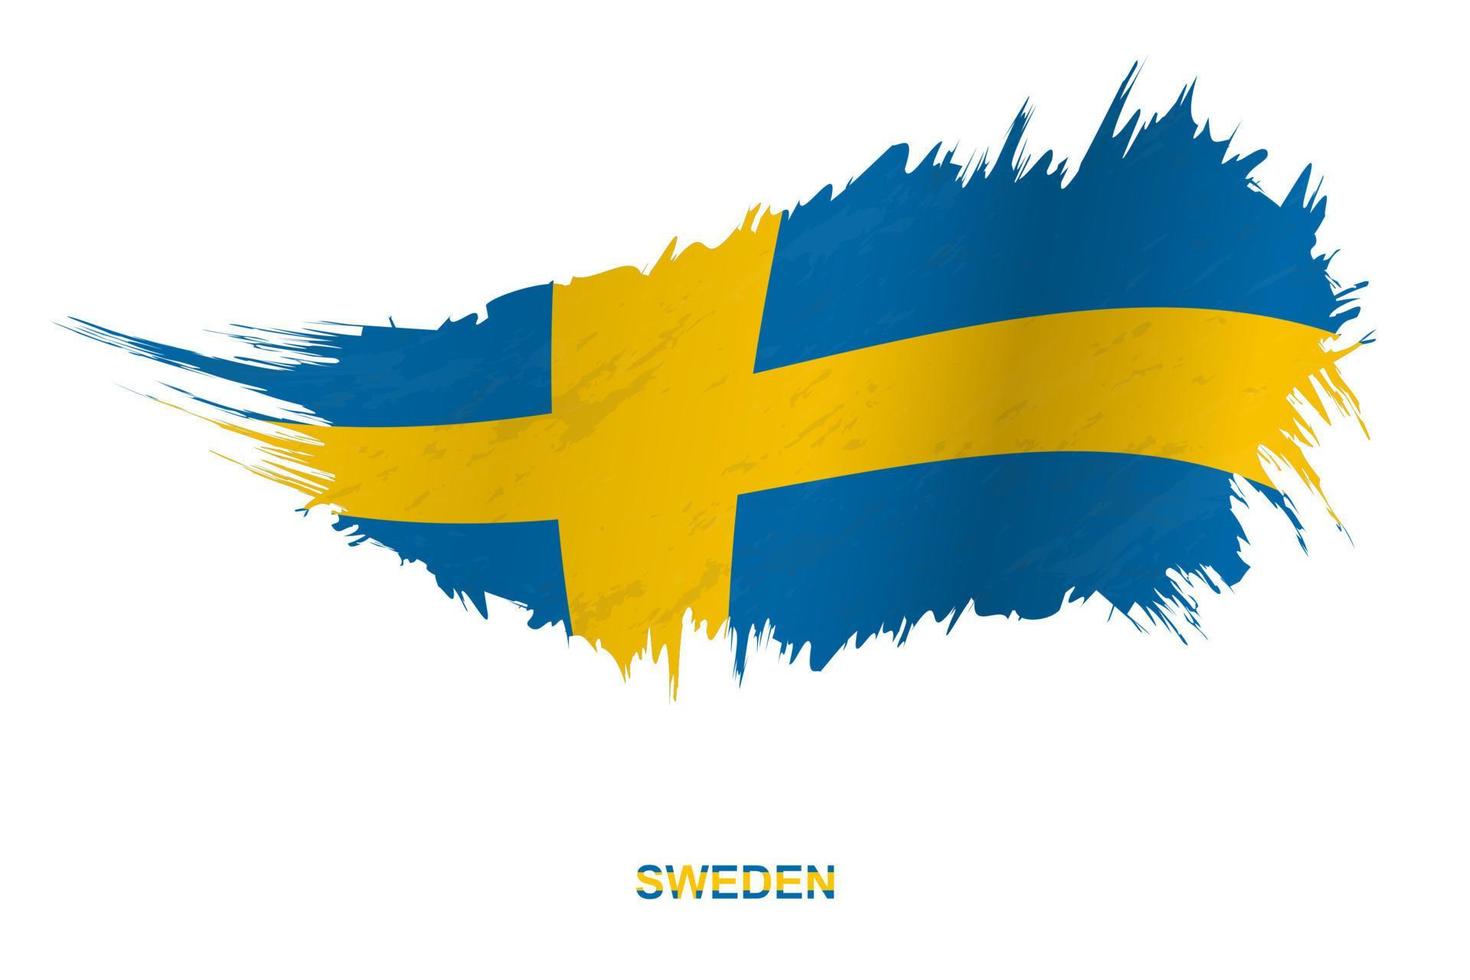 vlag van Zweden in grunge stijl met golvend effect. vector